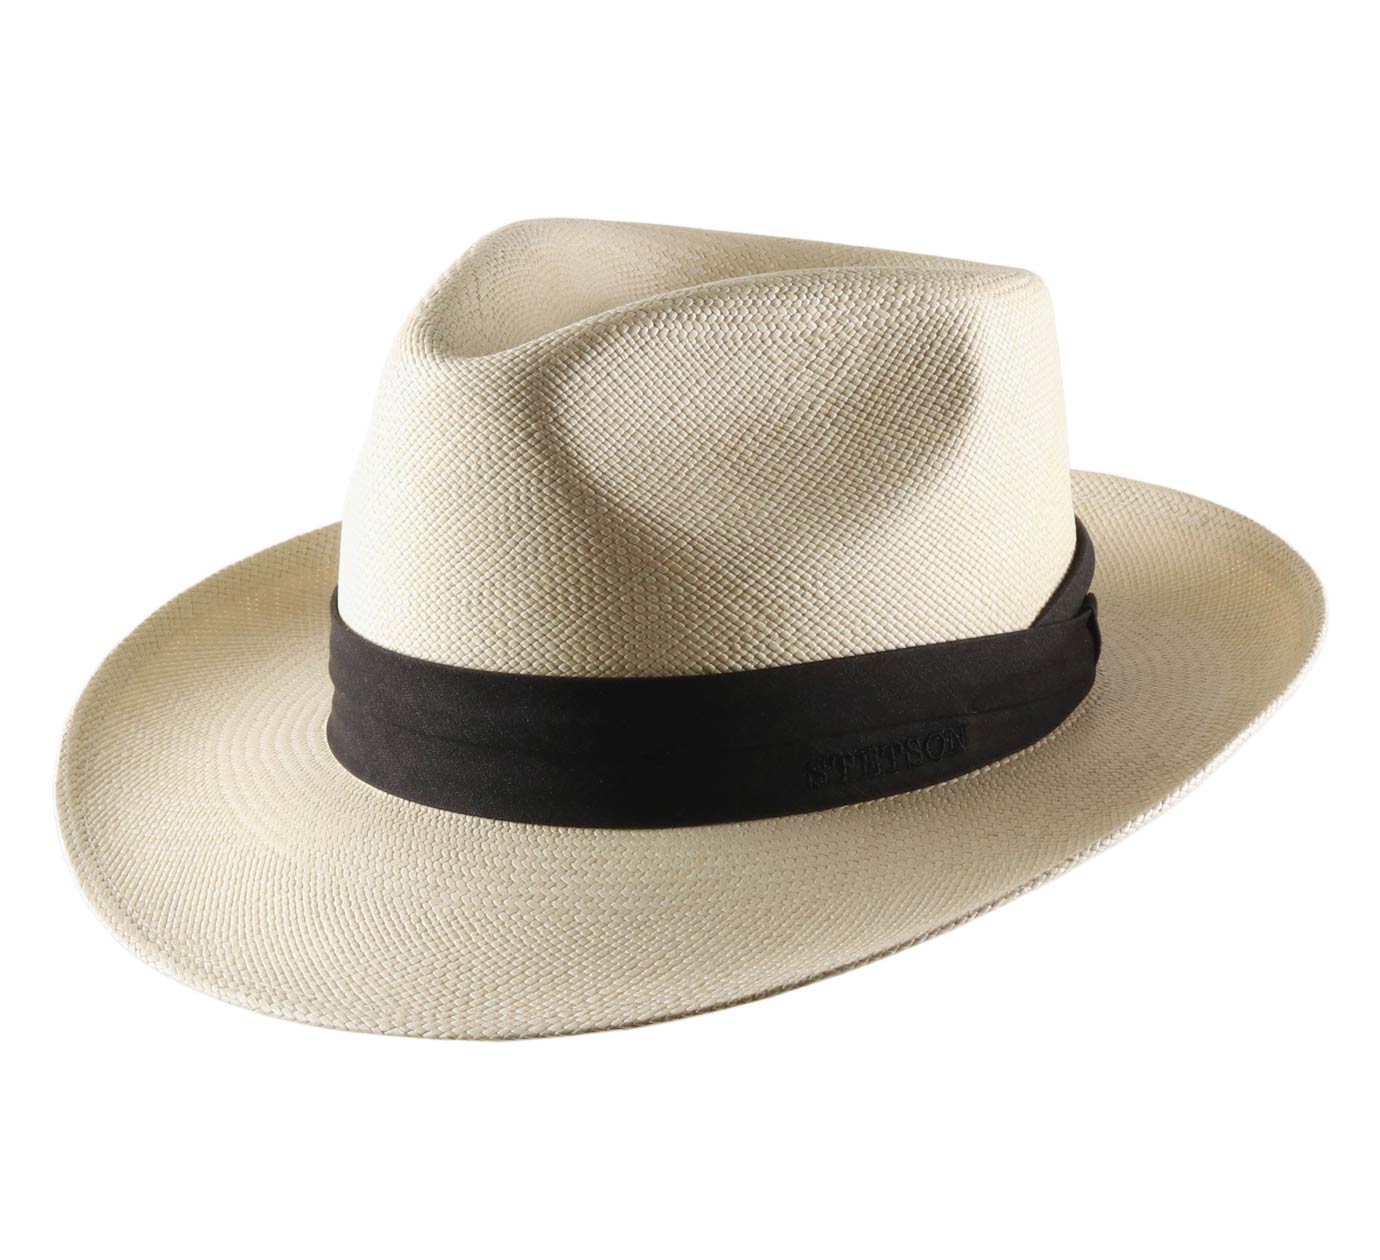 Made in Italy Stetson Solano Fedora Panama Hat Men.